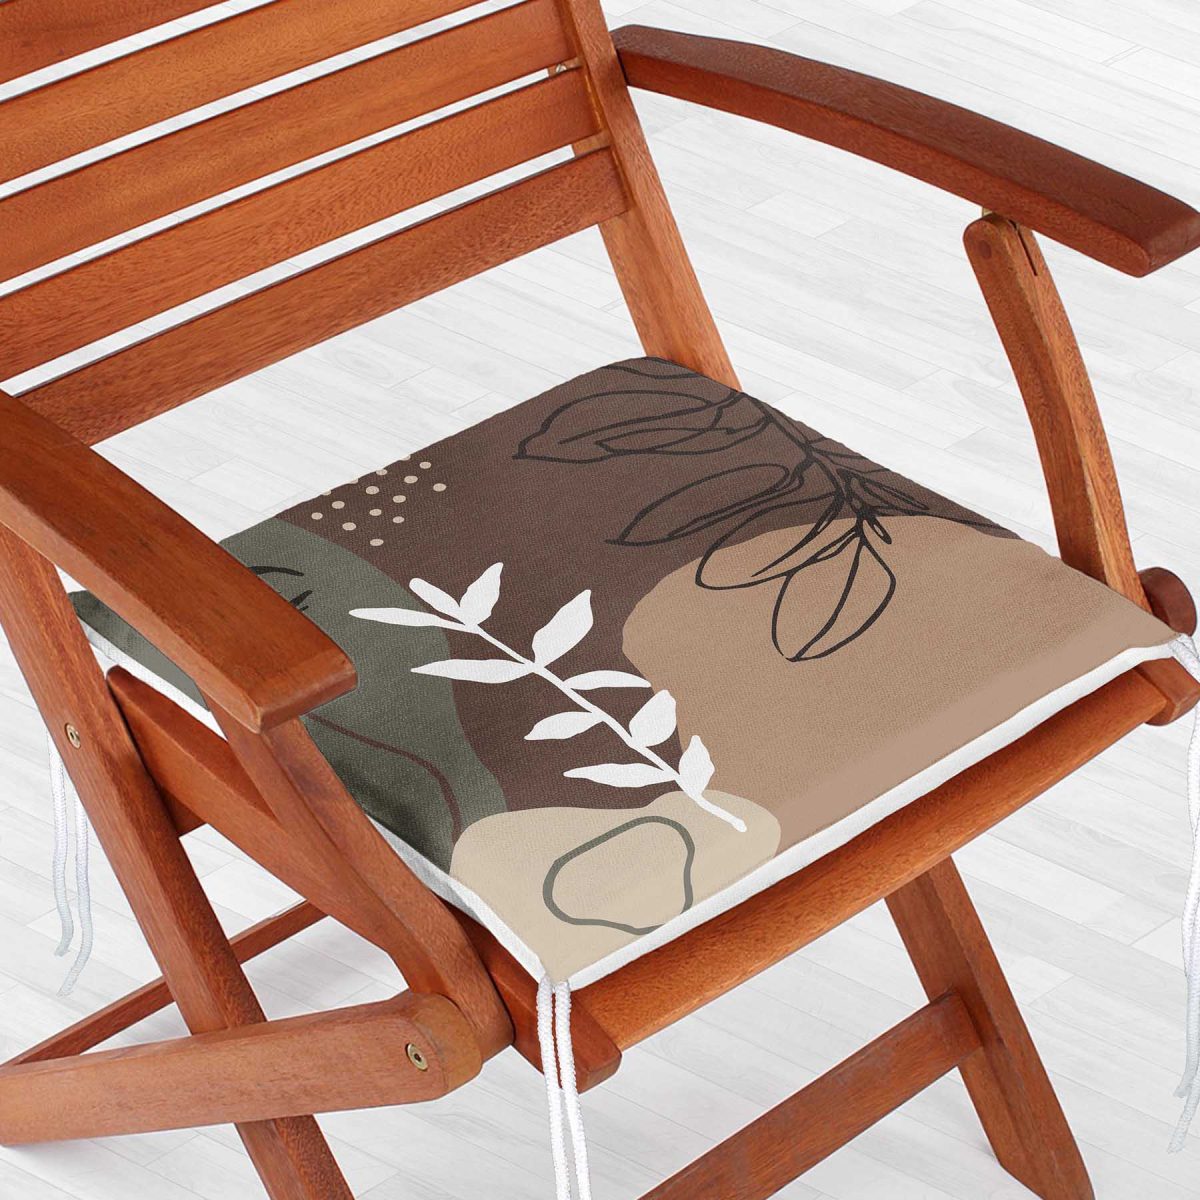 RealHomes Bohemian Özel Tasarım Dekoratif Fermuarlı Sandalye Minderi Realhomes